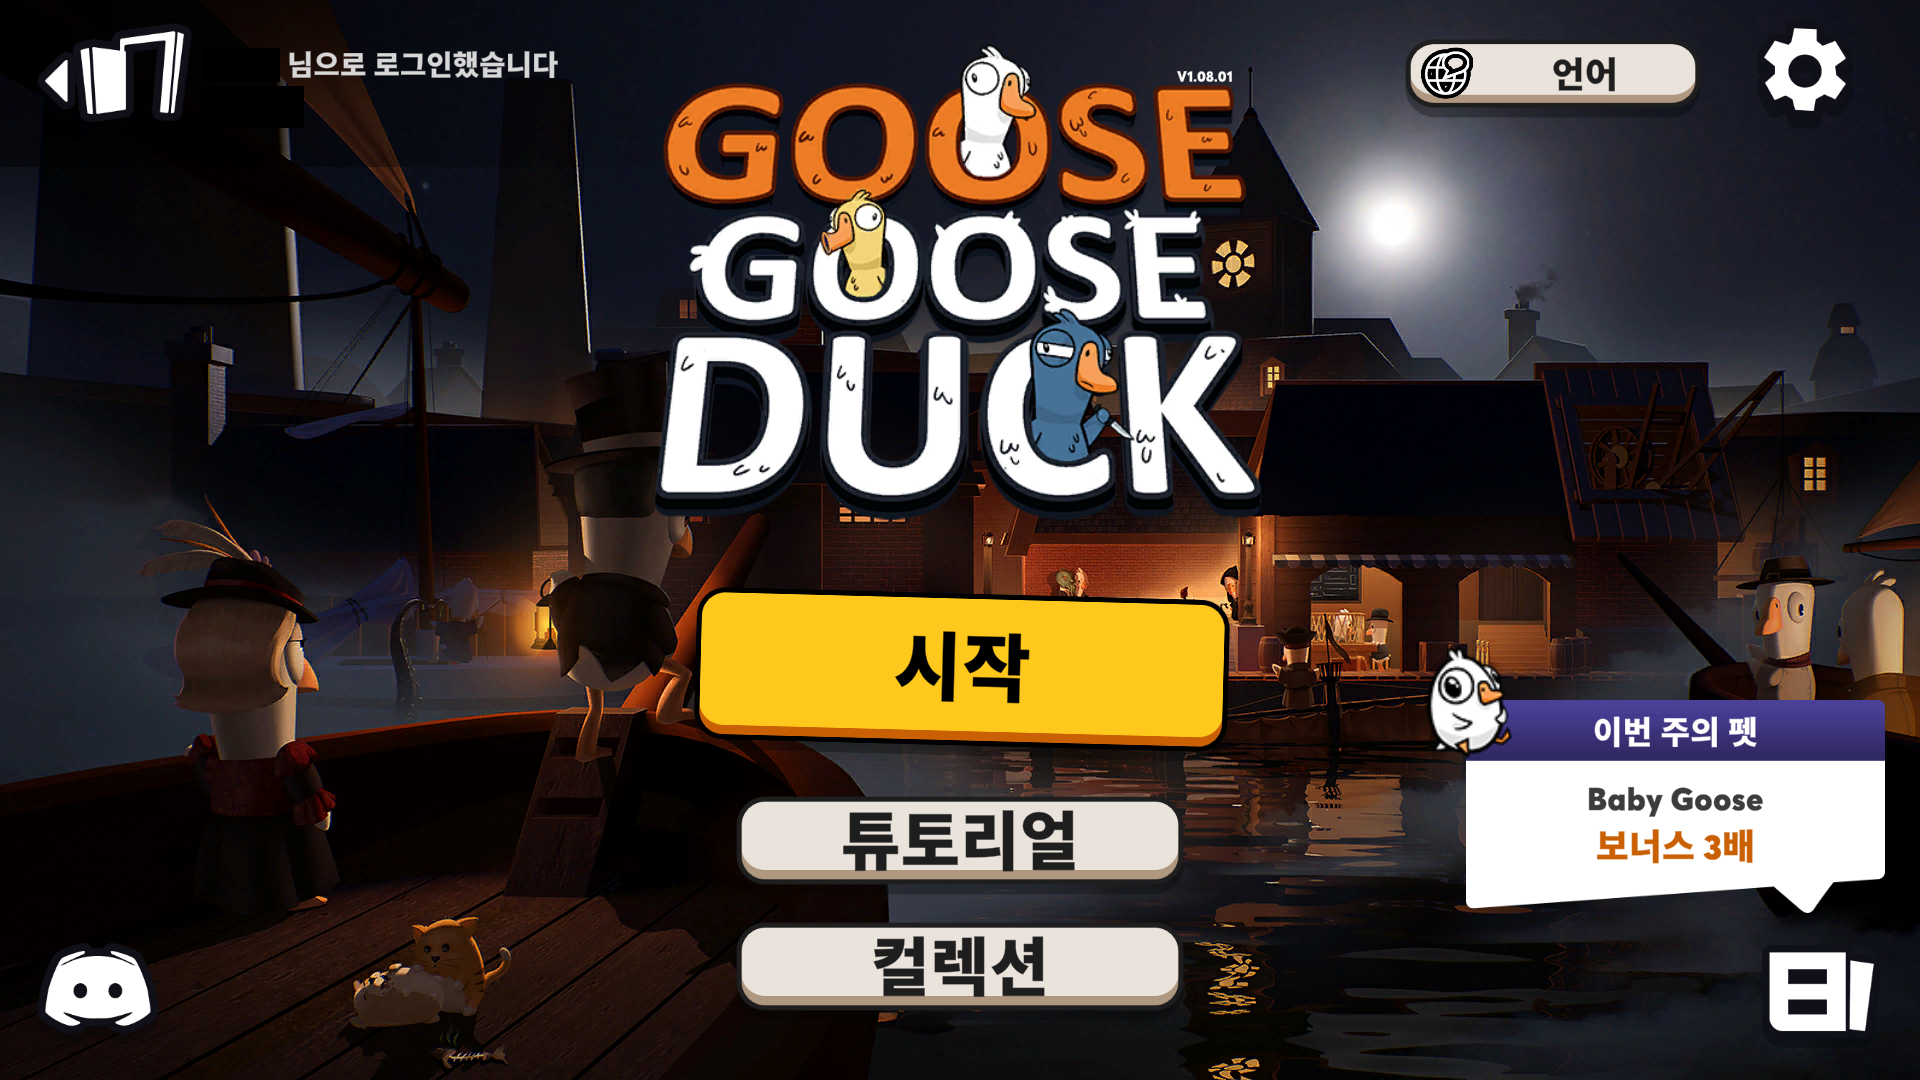 Goose Goose Duck&#44; 메인화면